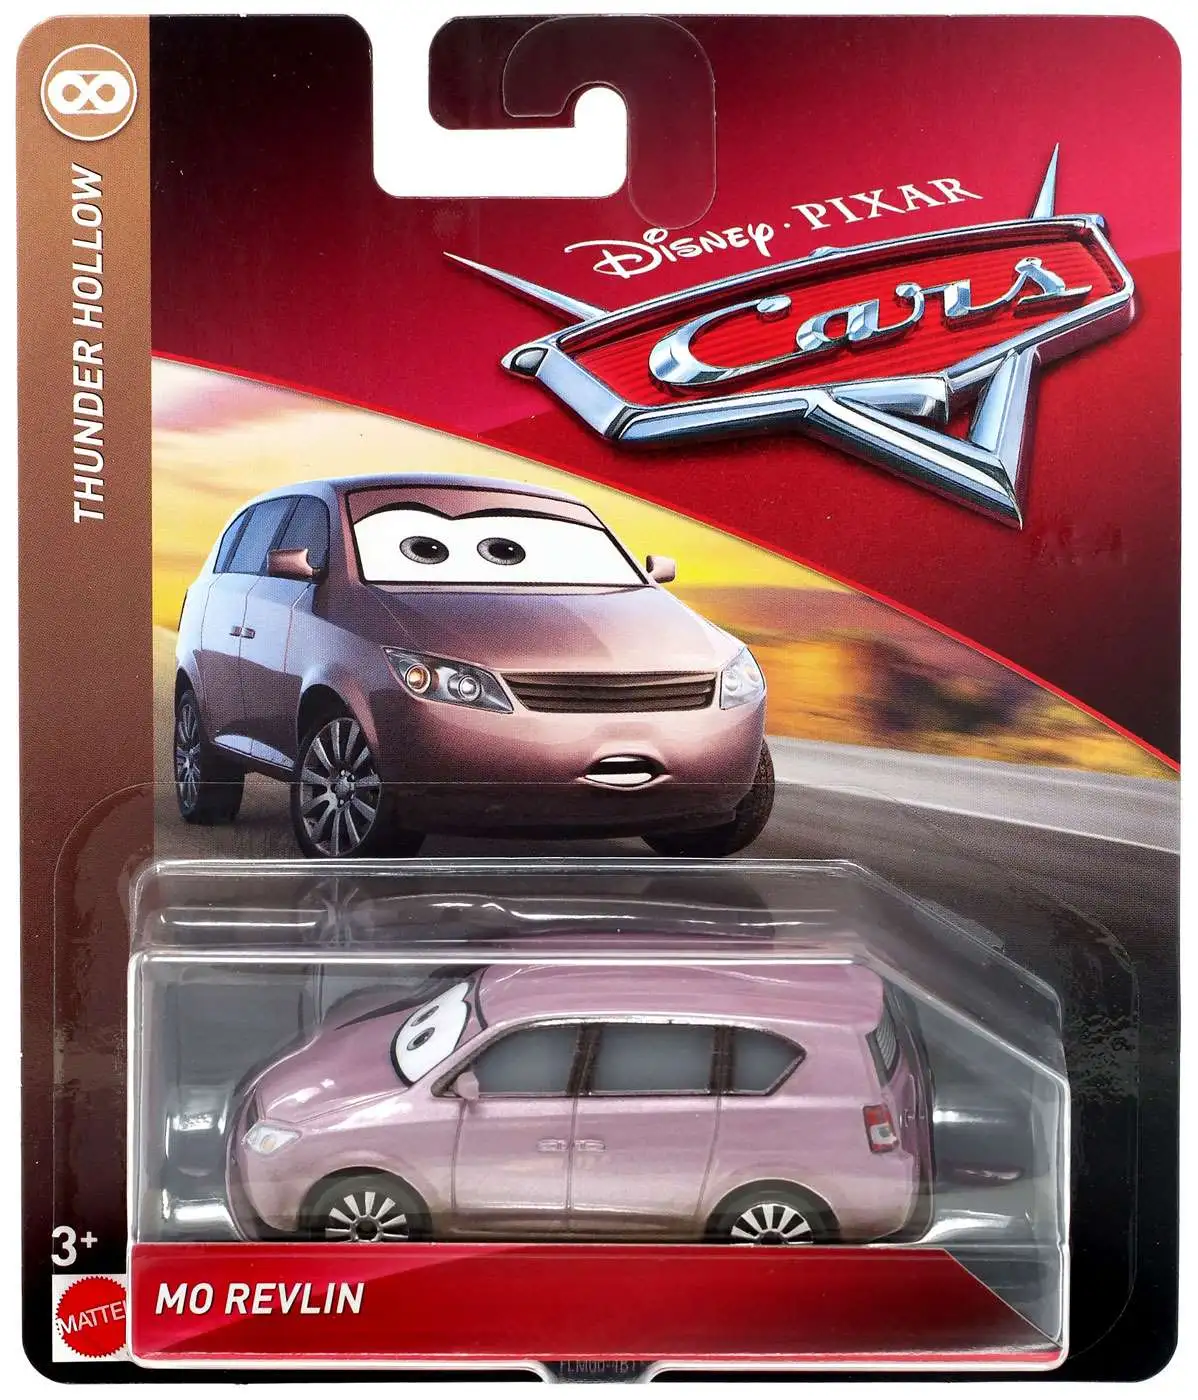 CARS 3 MO REVLIN Mattel Disney Pixar 